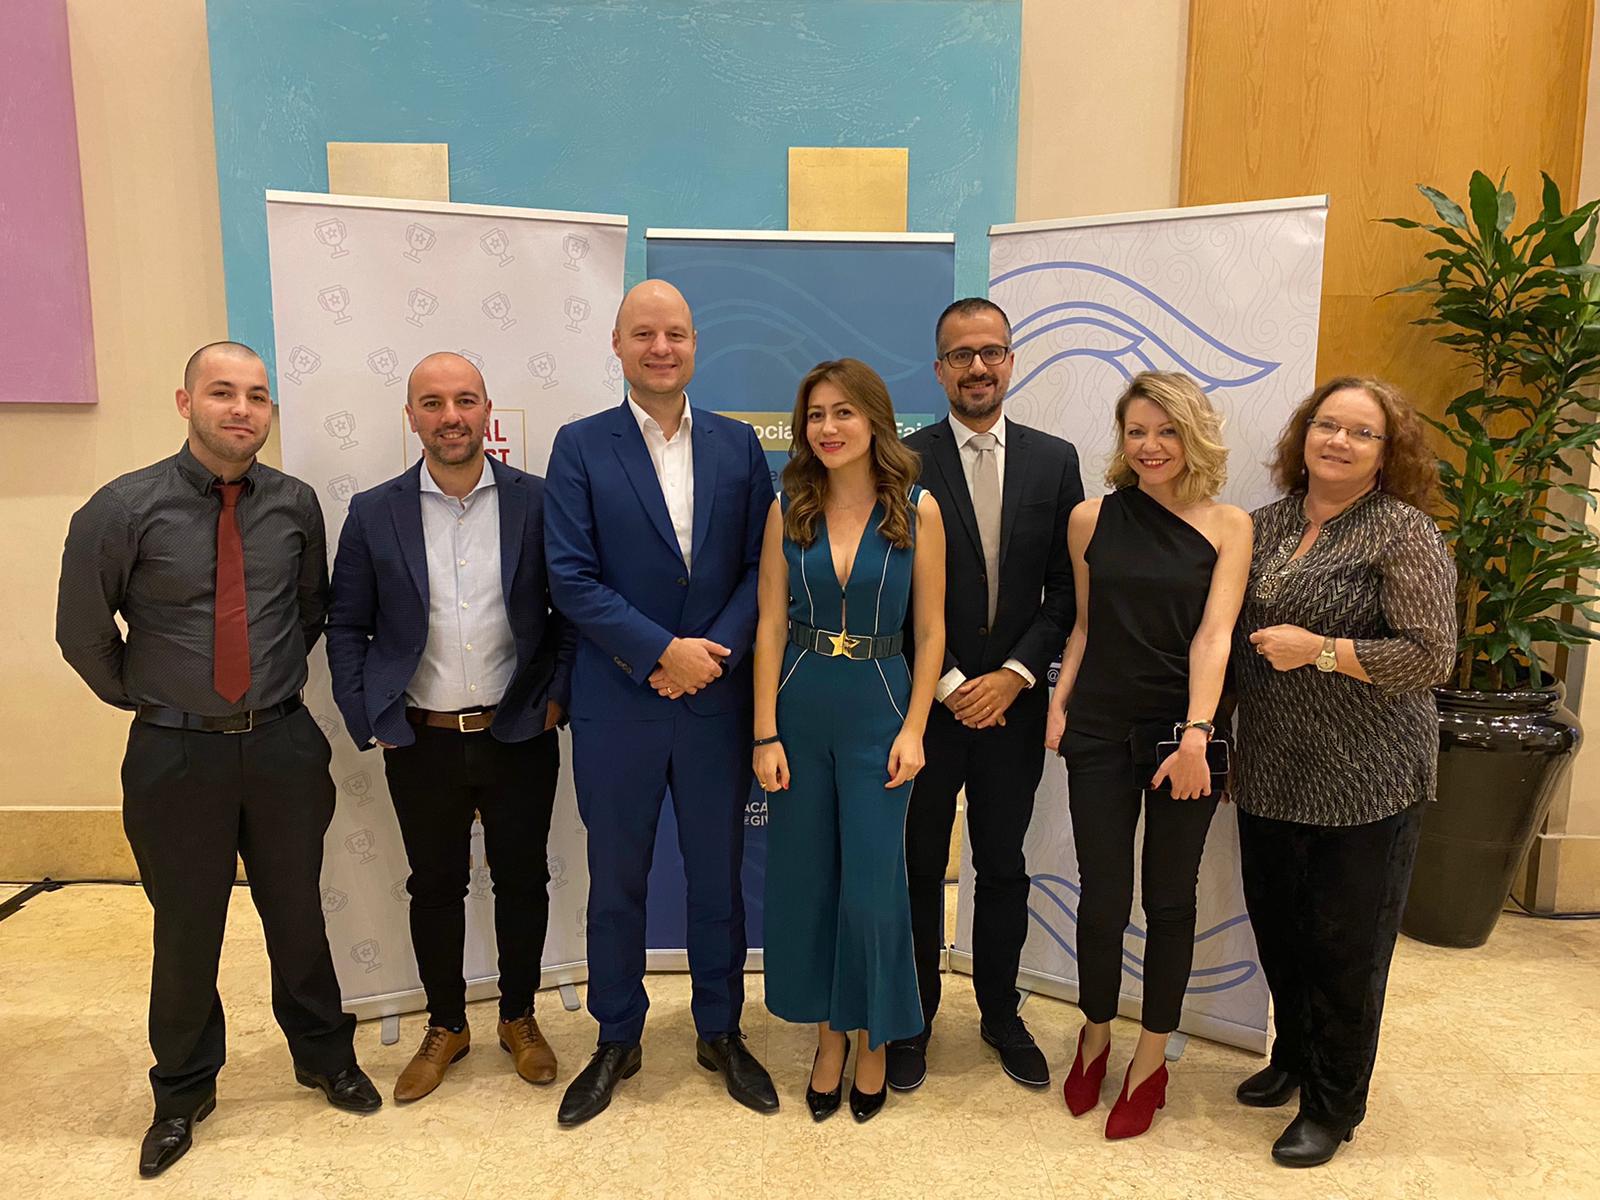 Malta Social Impact Awards 2019 - One Betsson